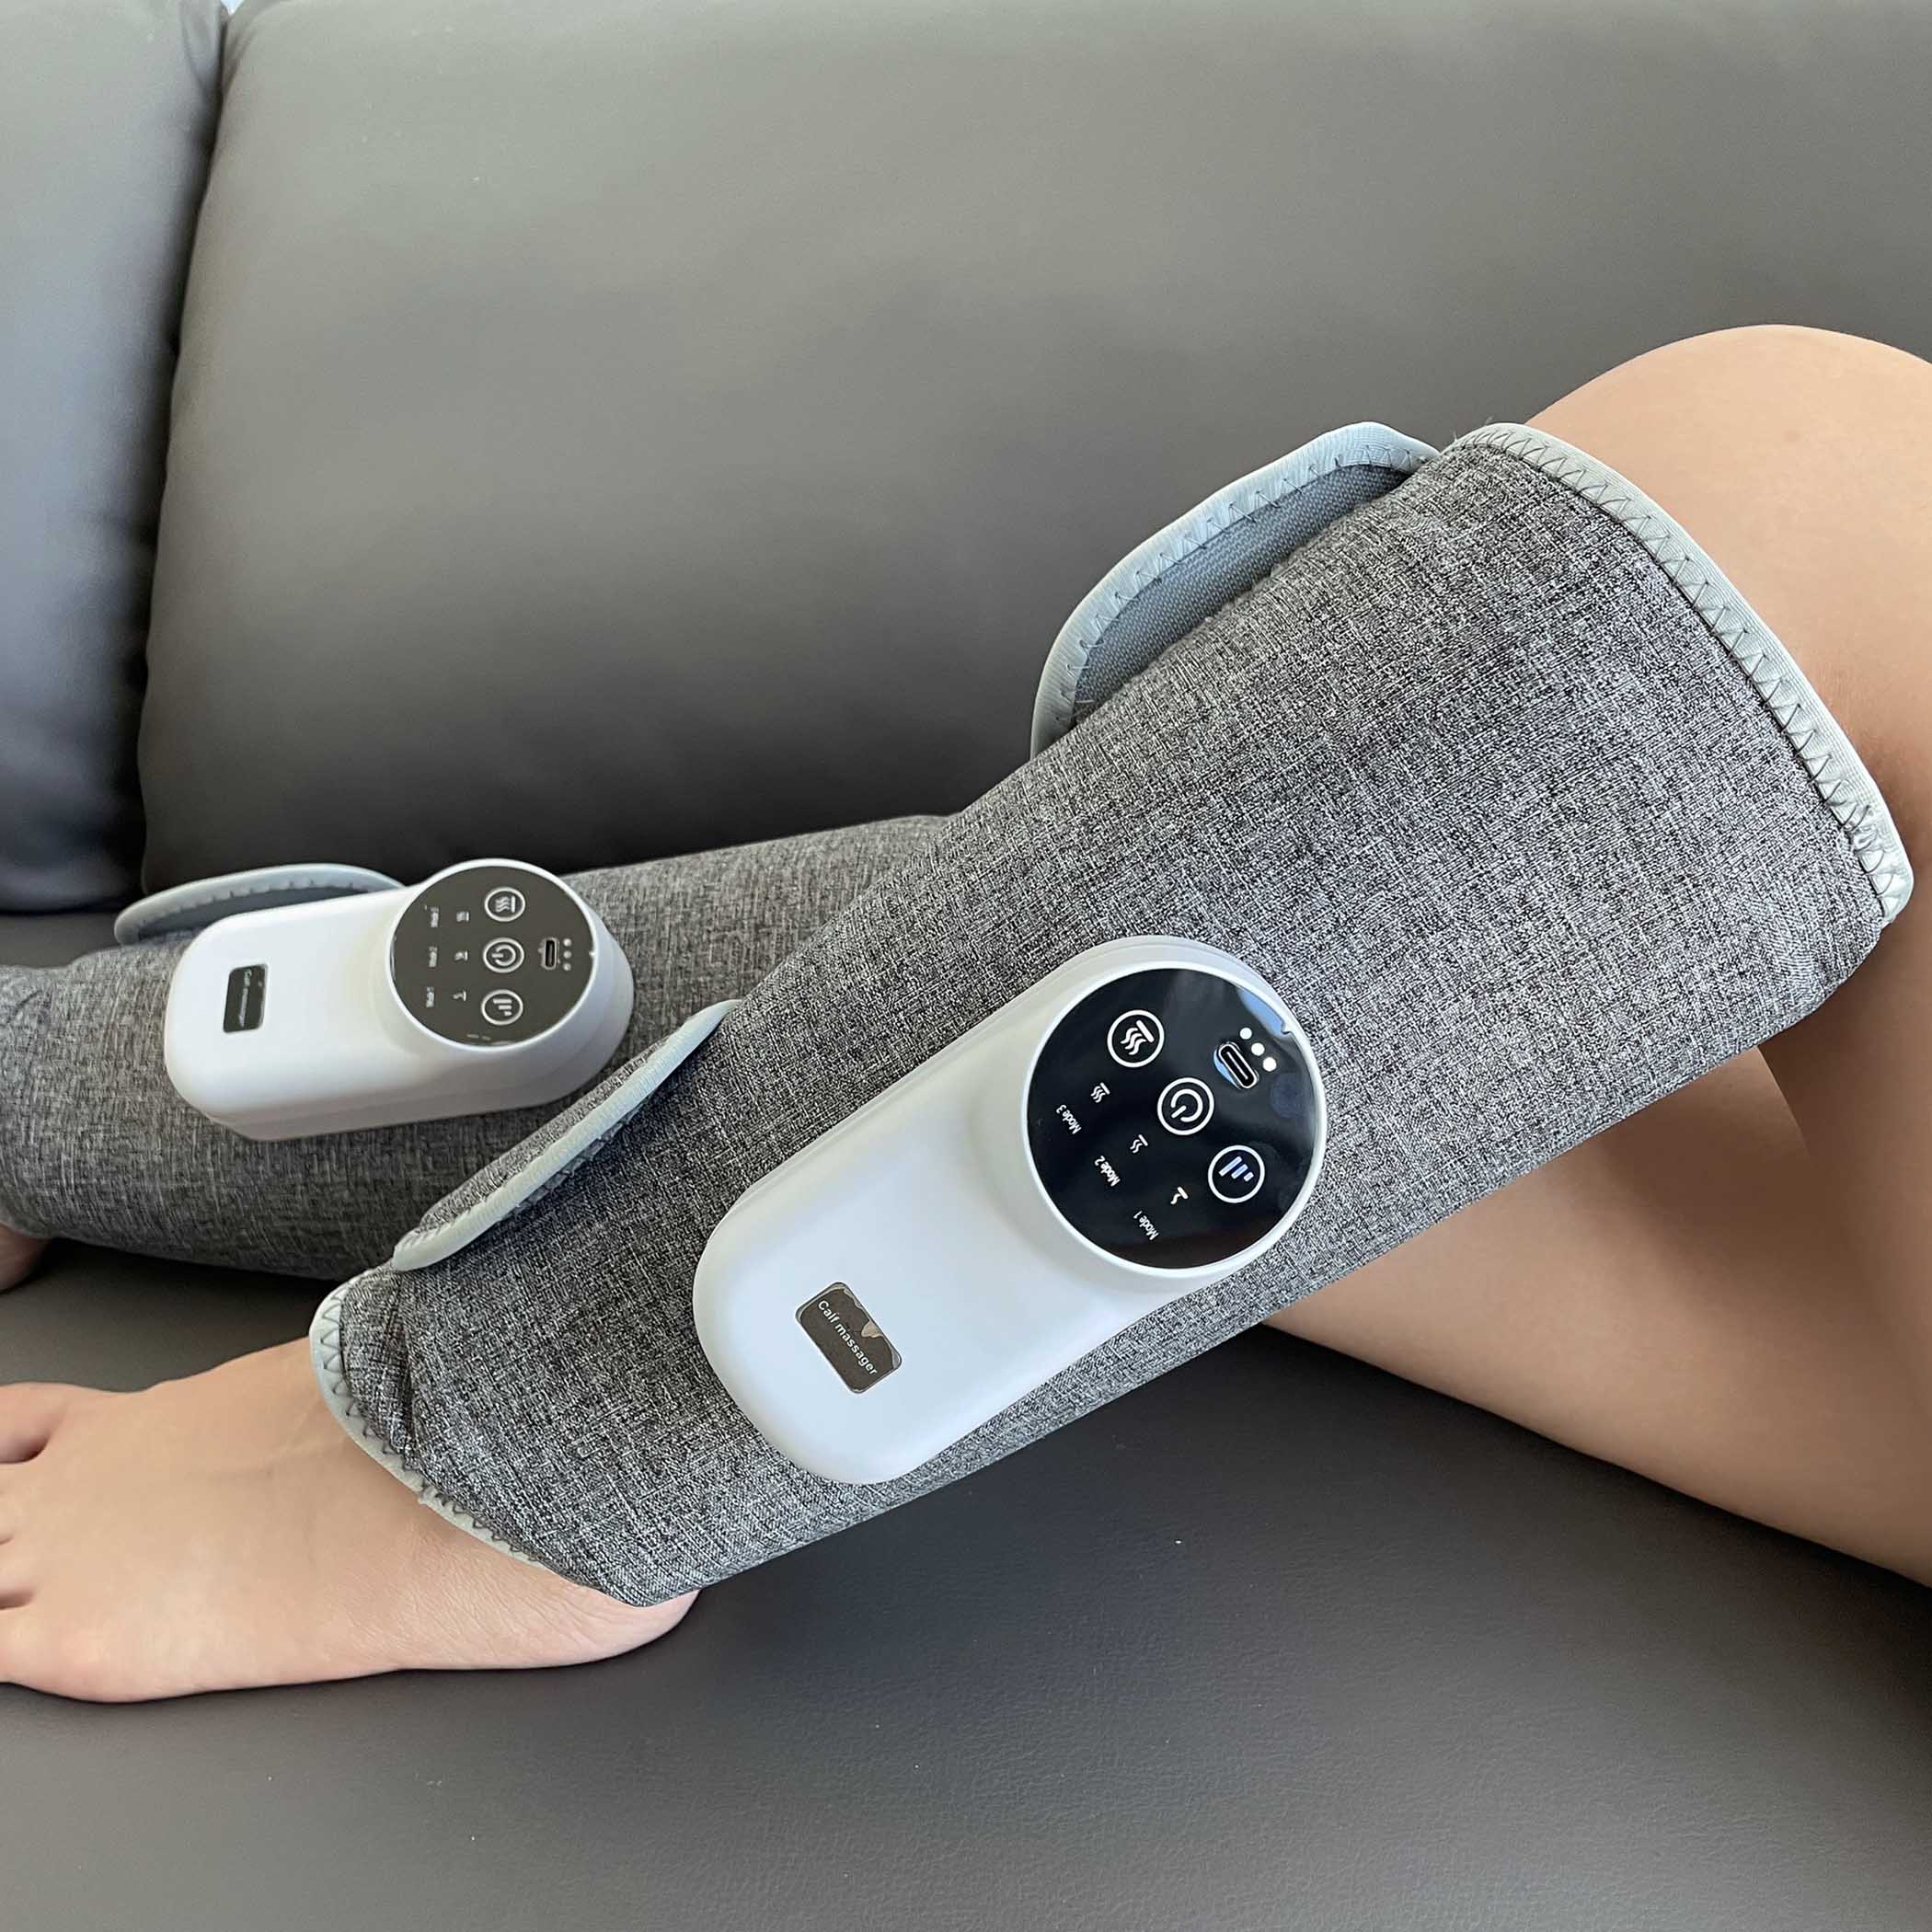 ZMIND F011 heated calf arm wrap with massage vibration air leg and calf massager